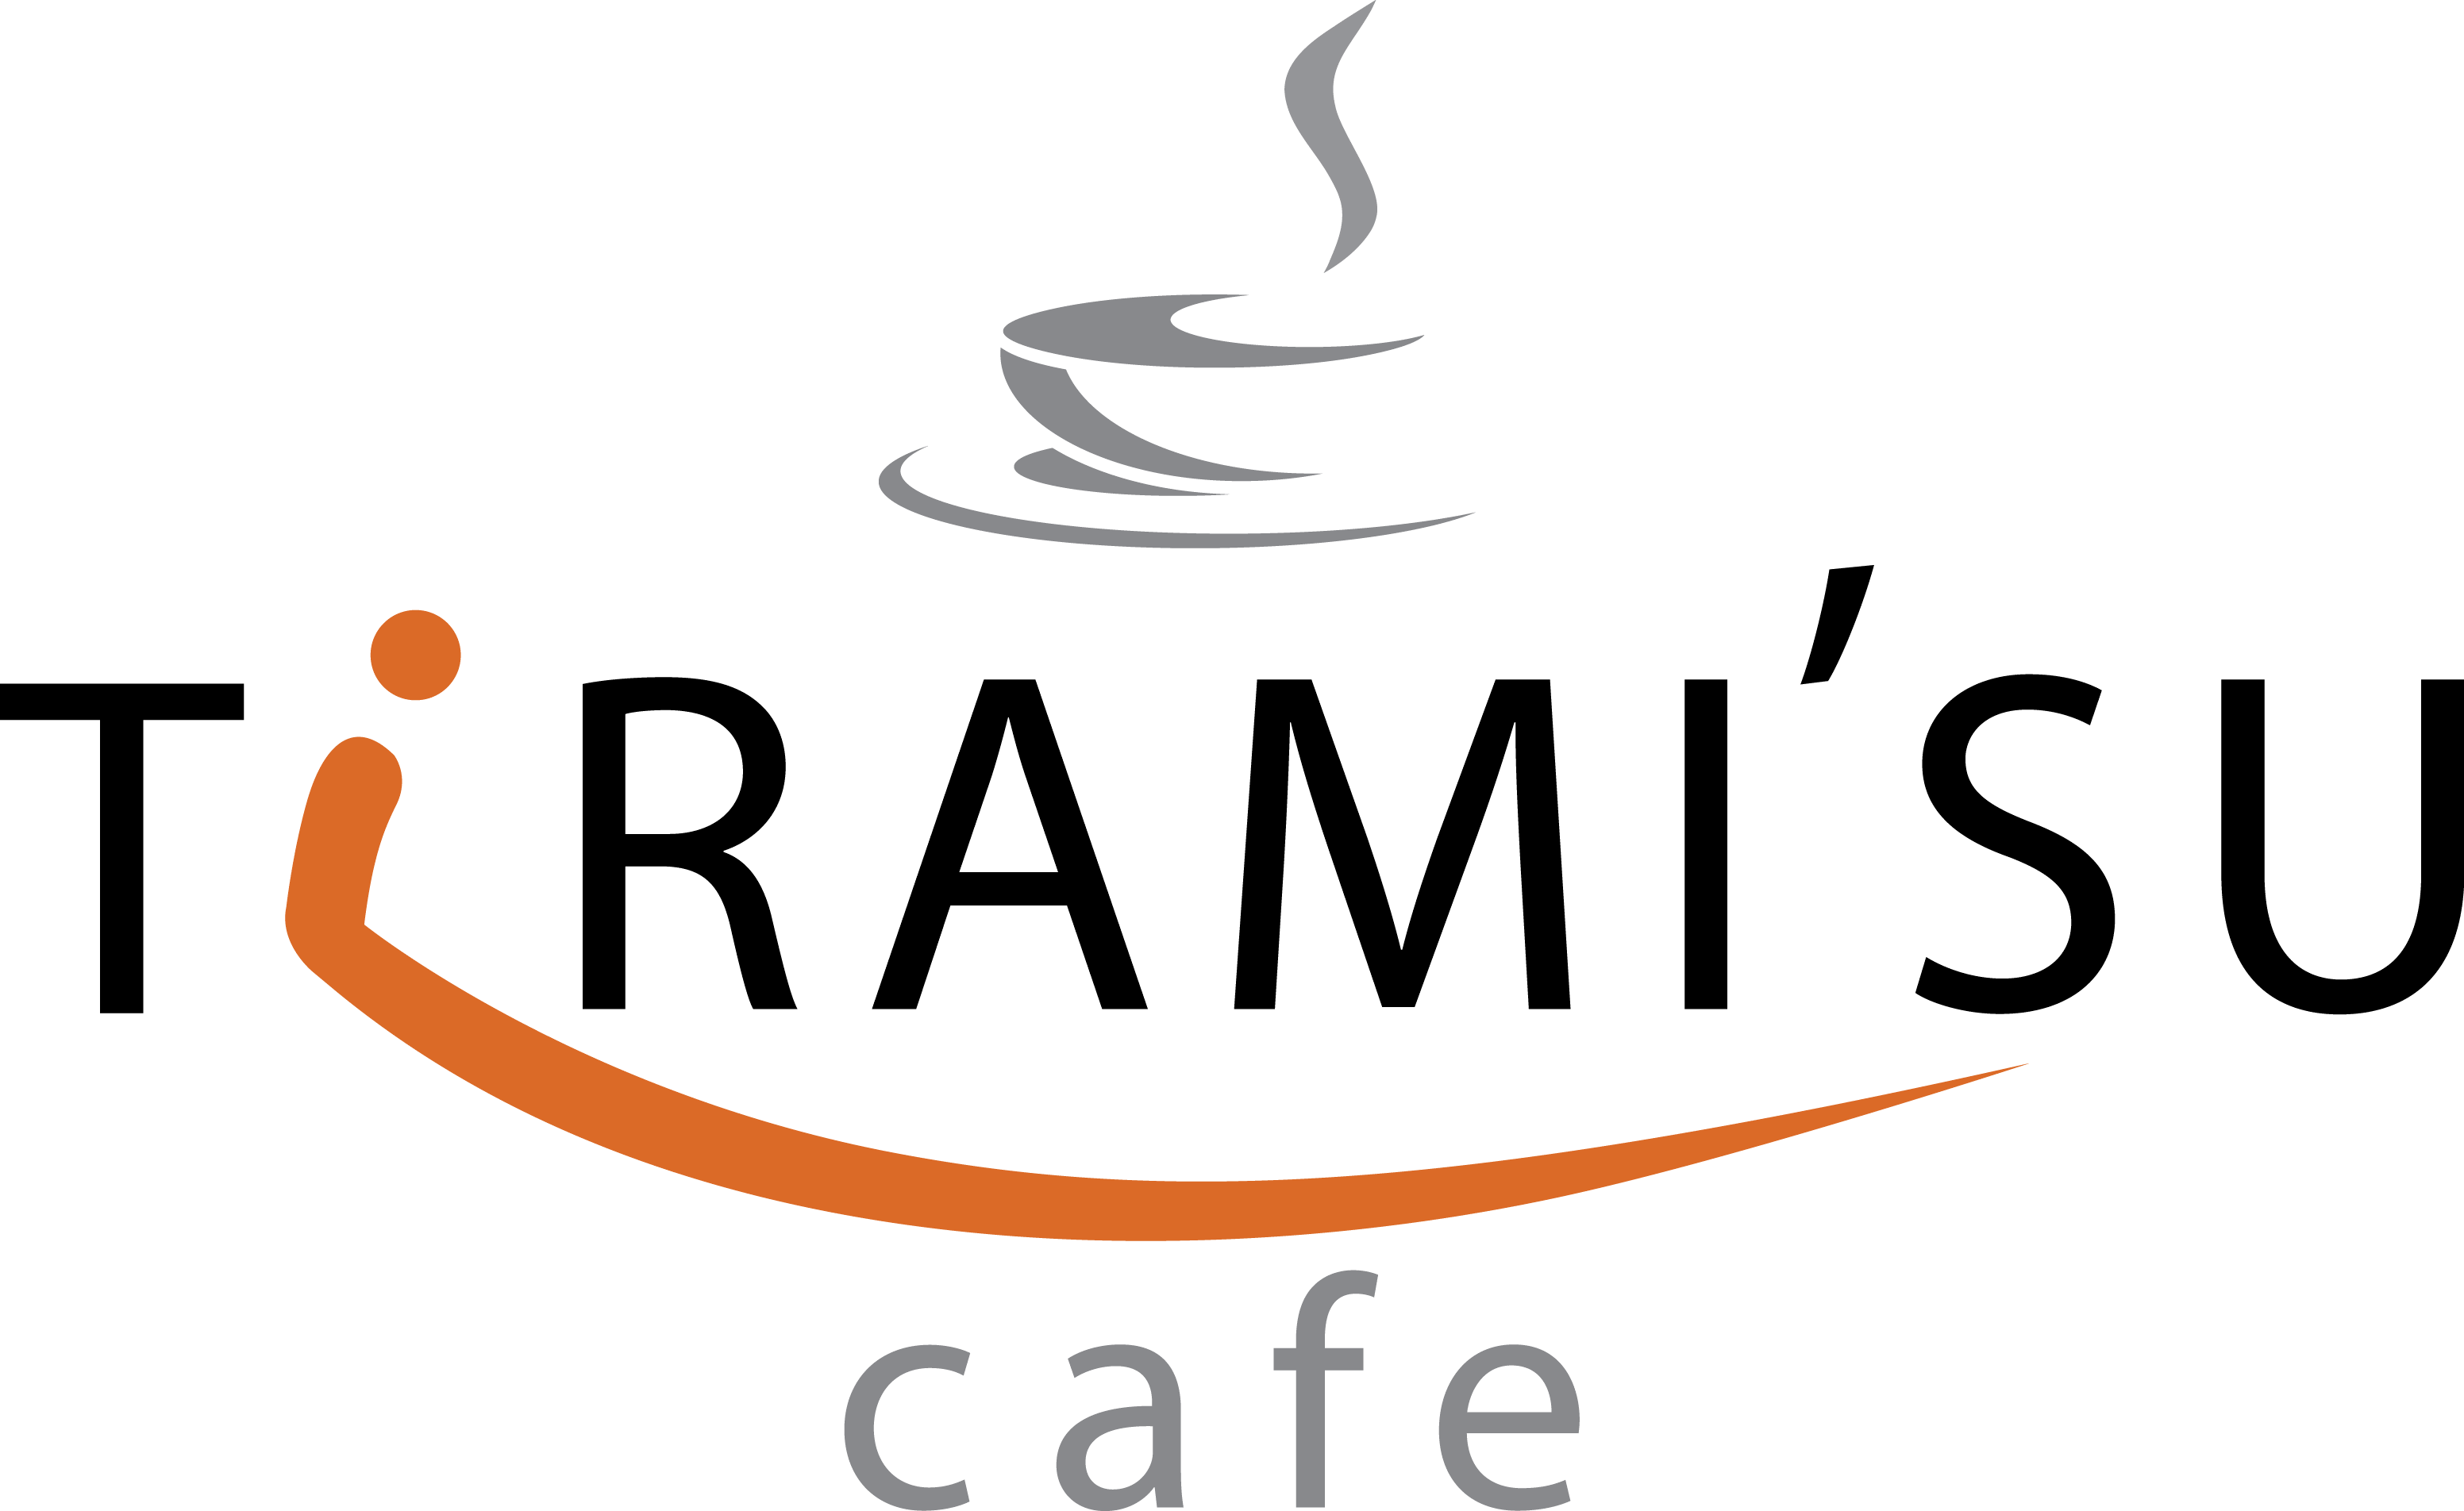 Tiramisu Cafe logo